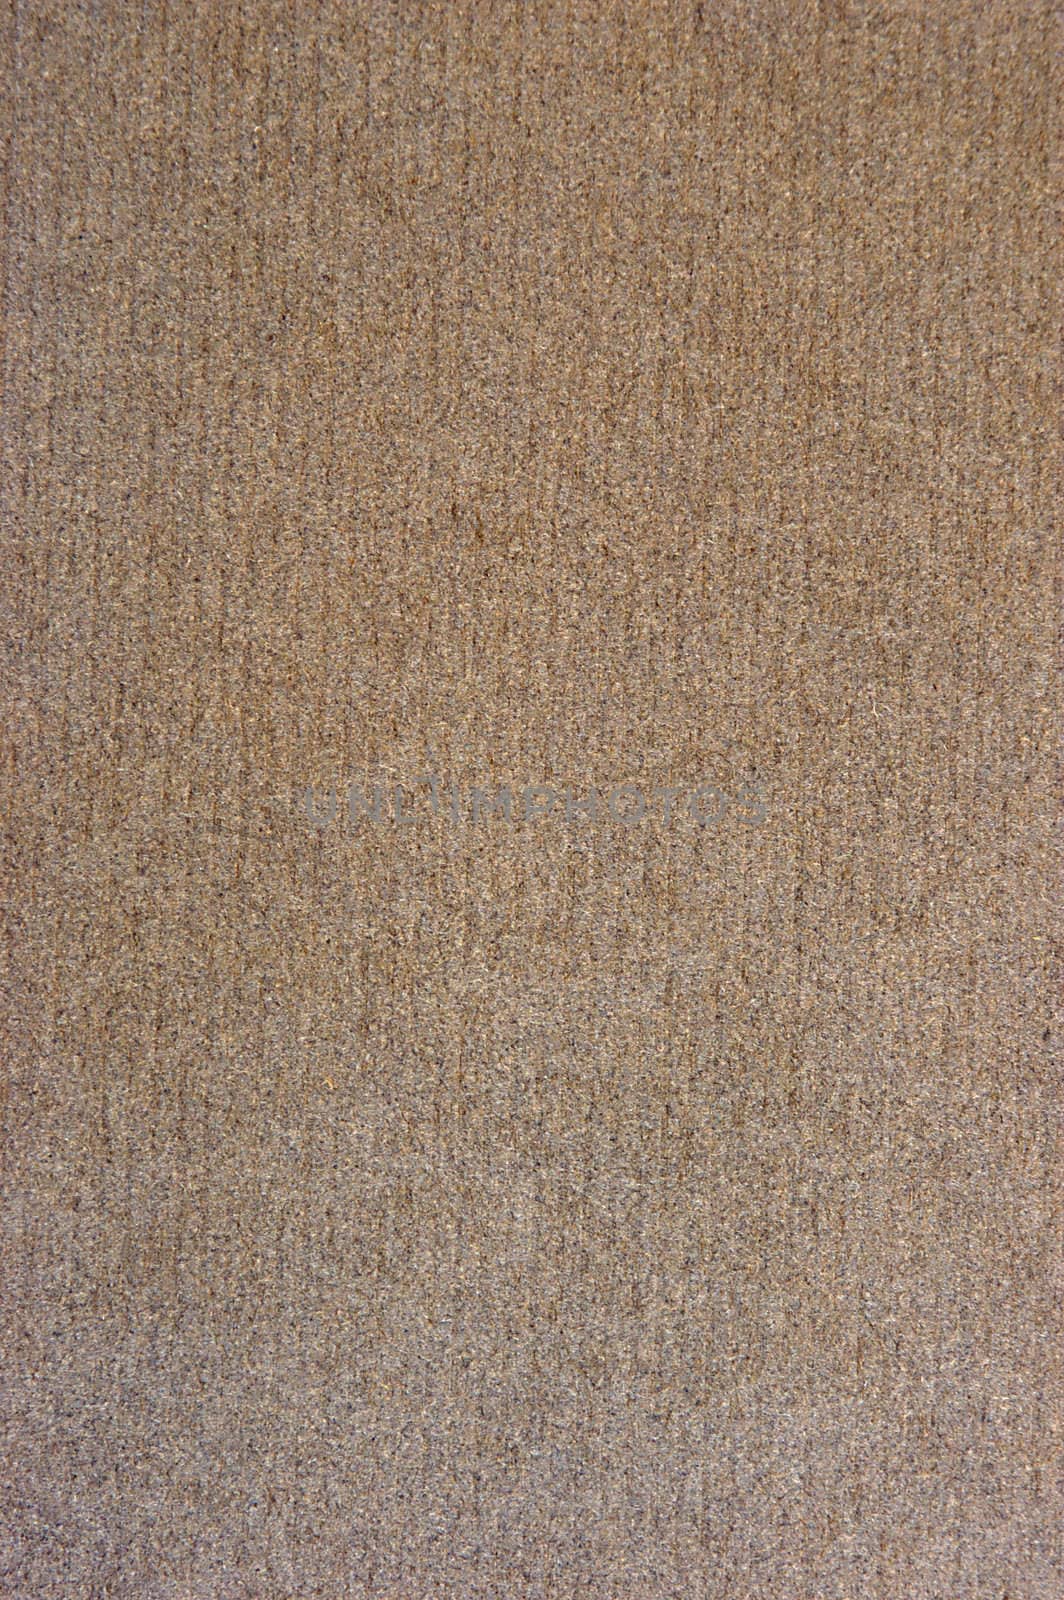 brown paper texture background macro